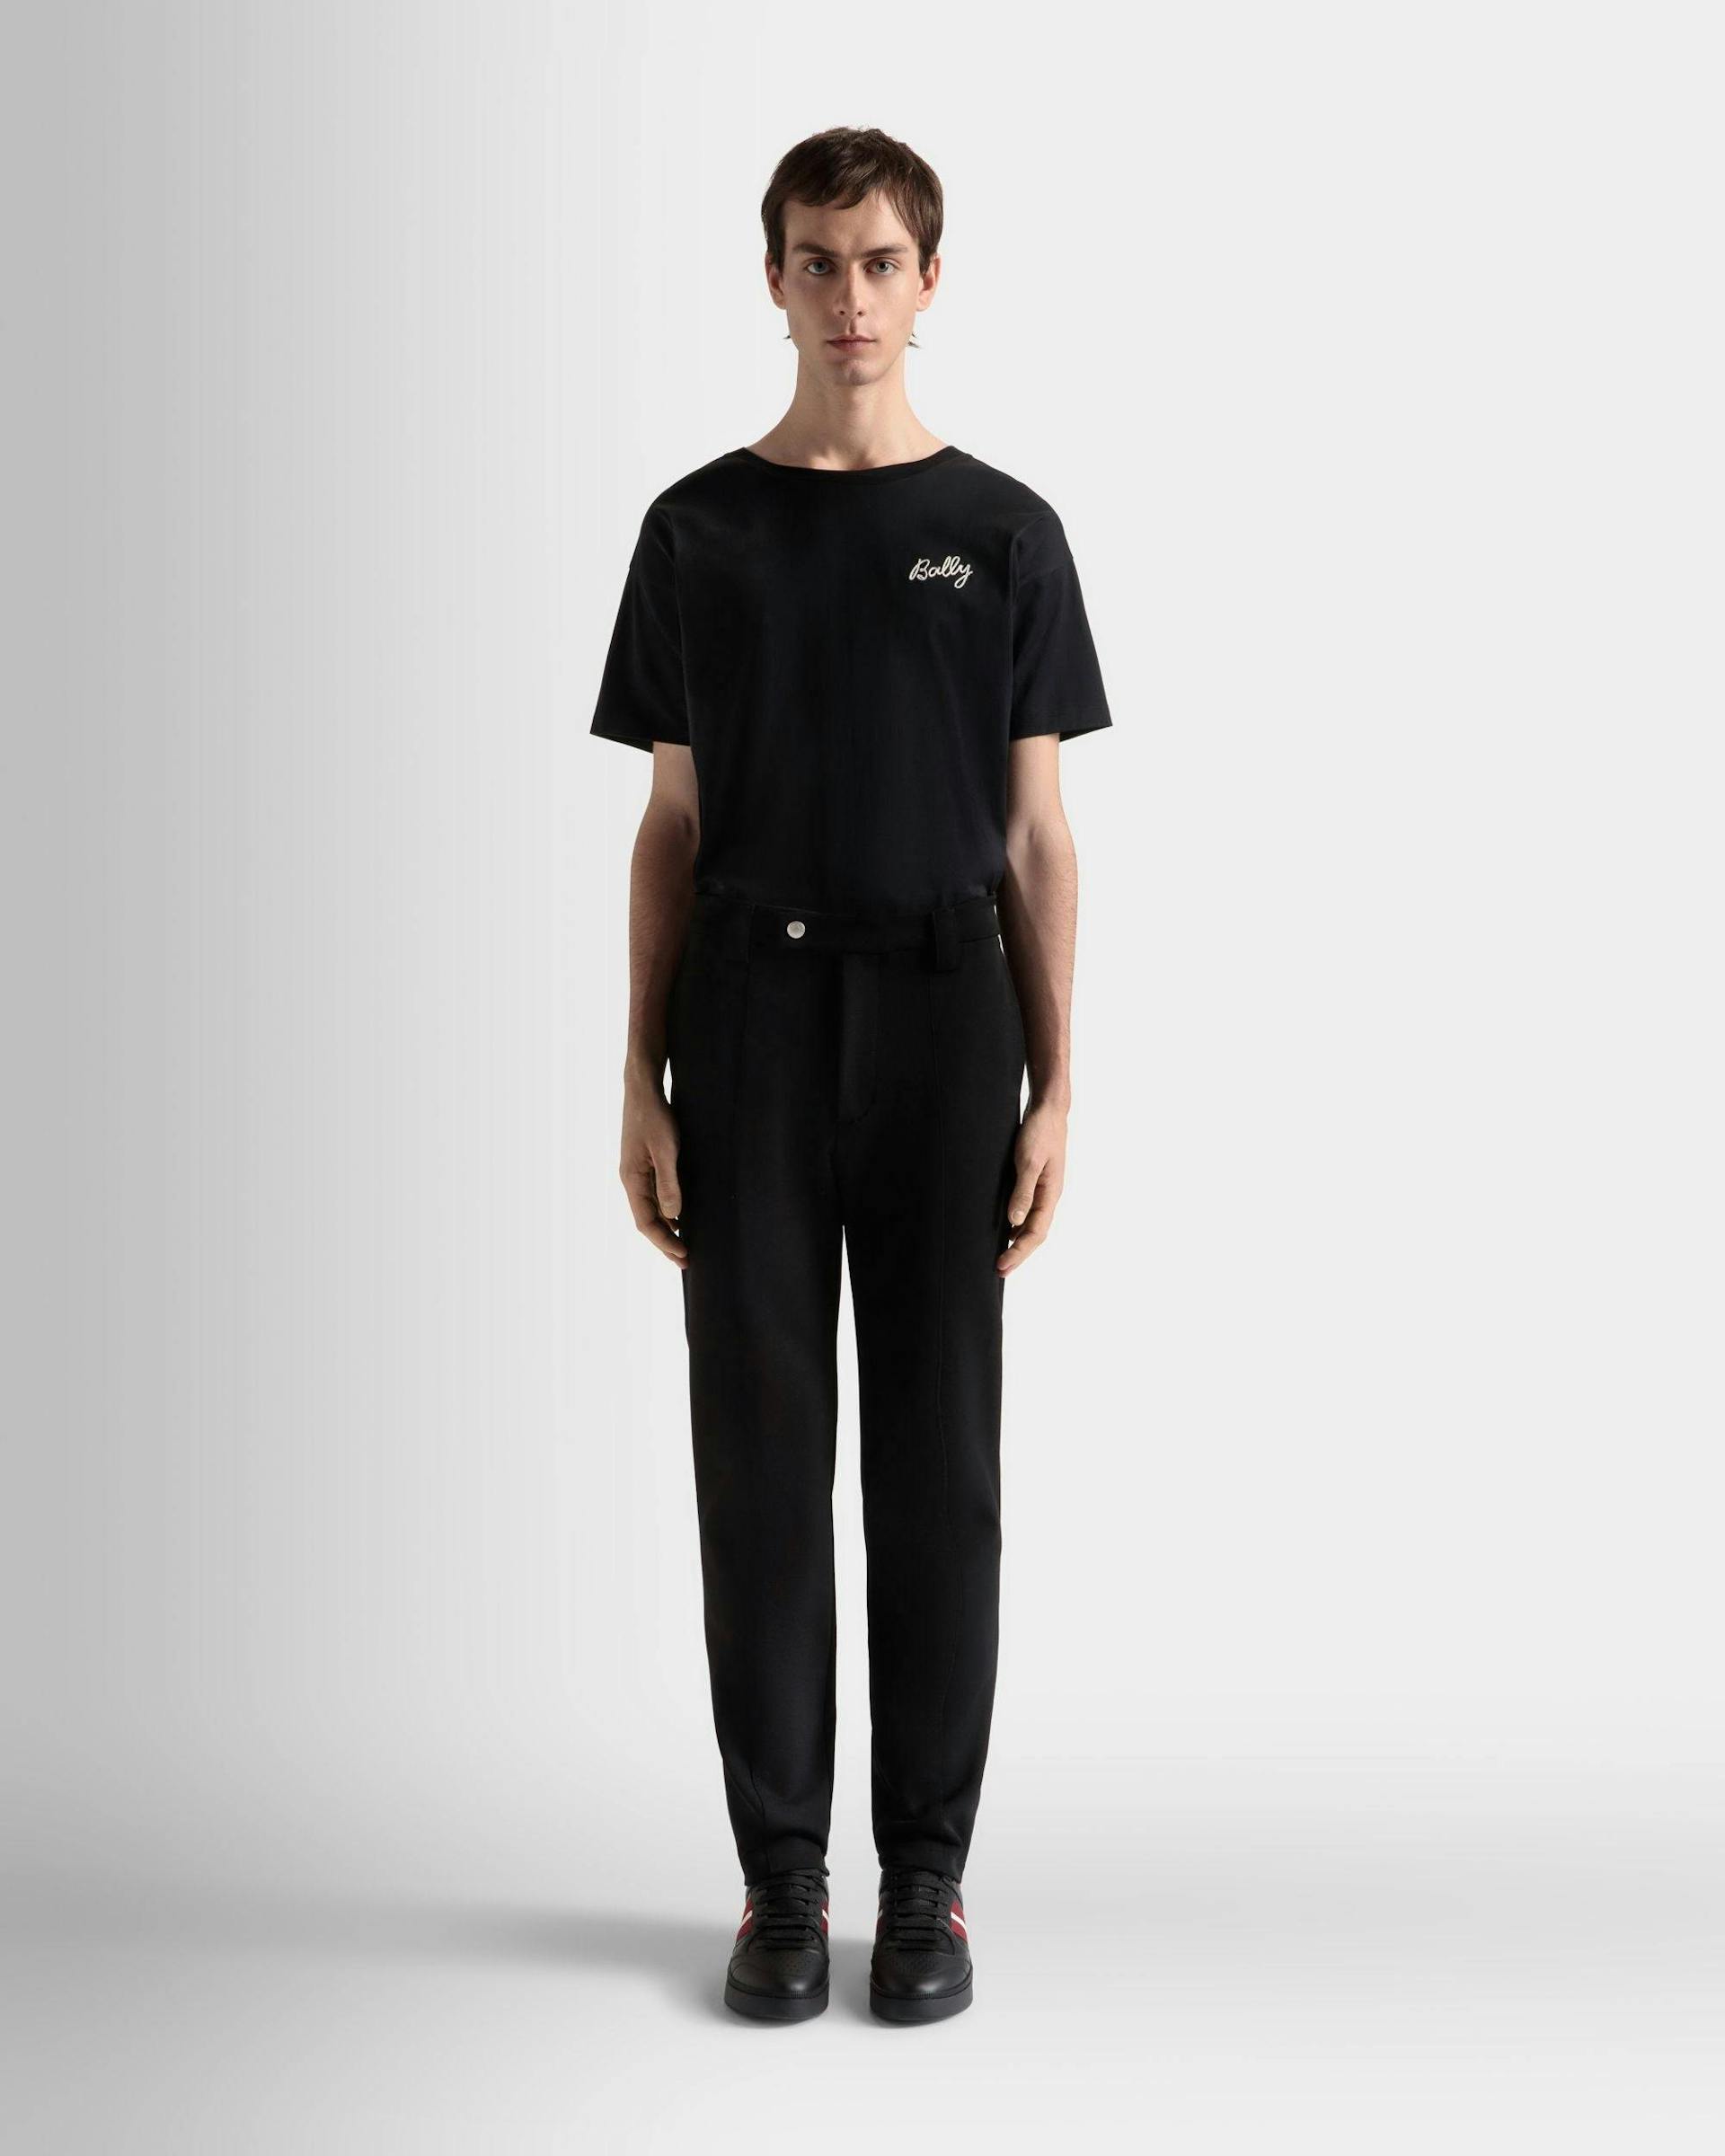 Men's Pants In Black | Bally | On Model Front